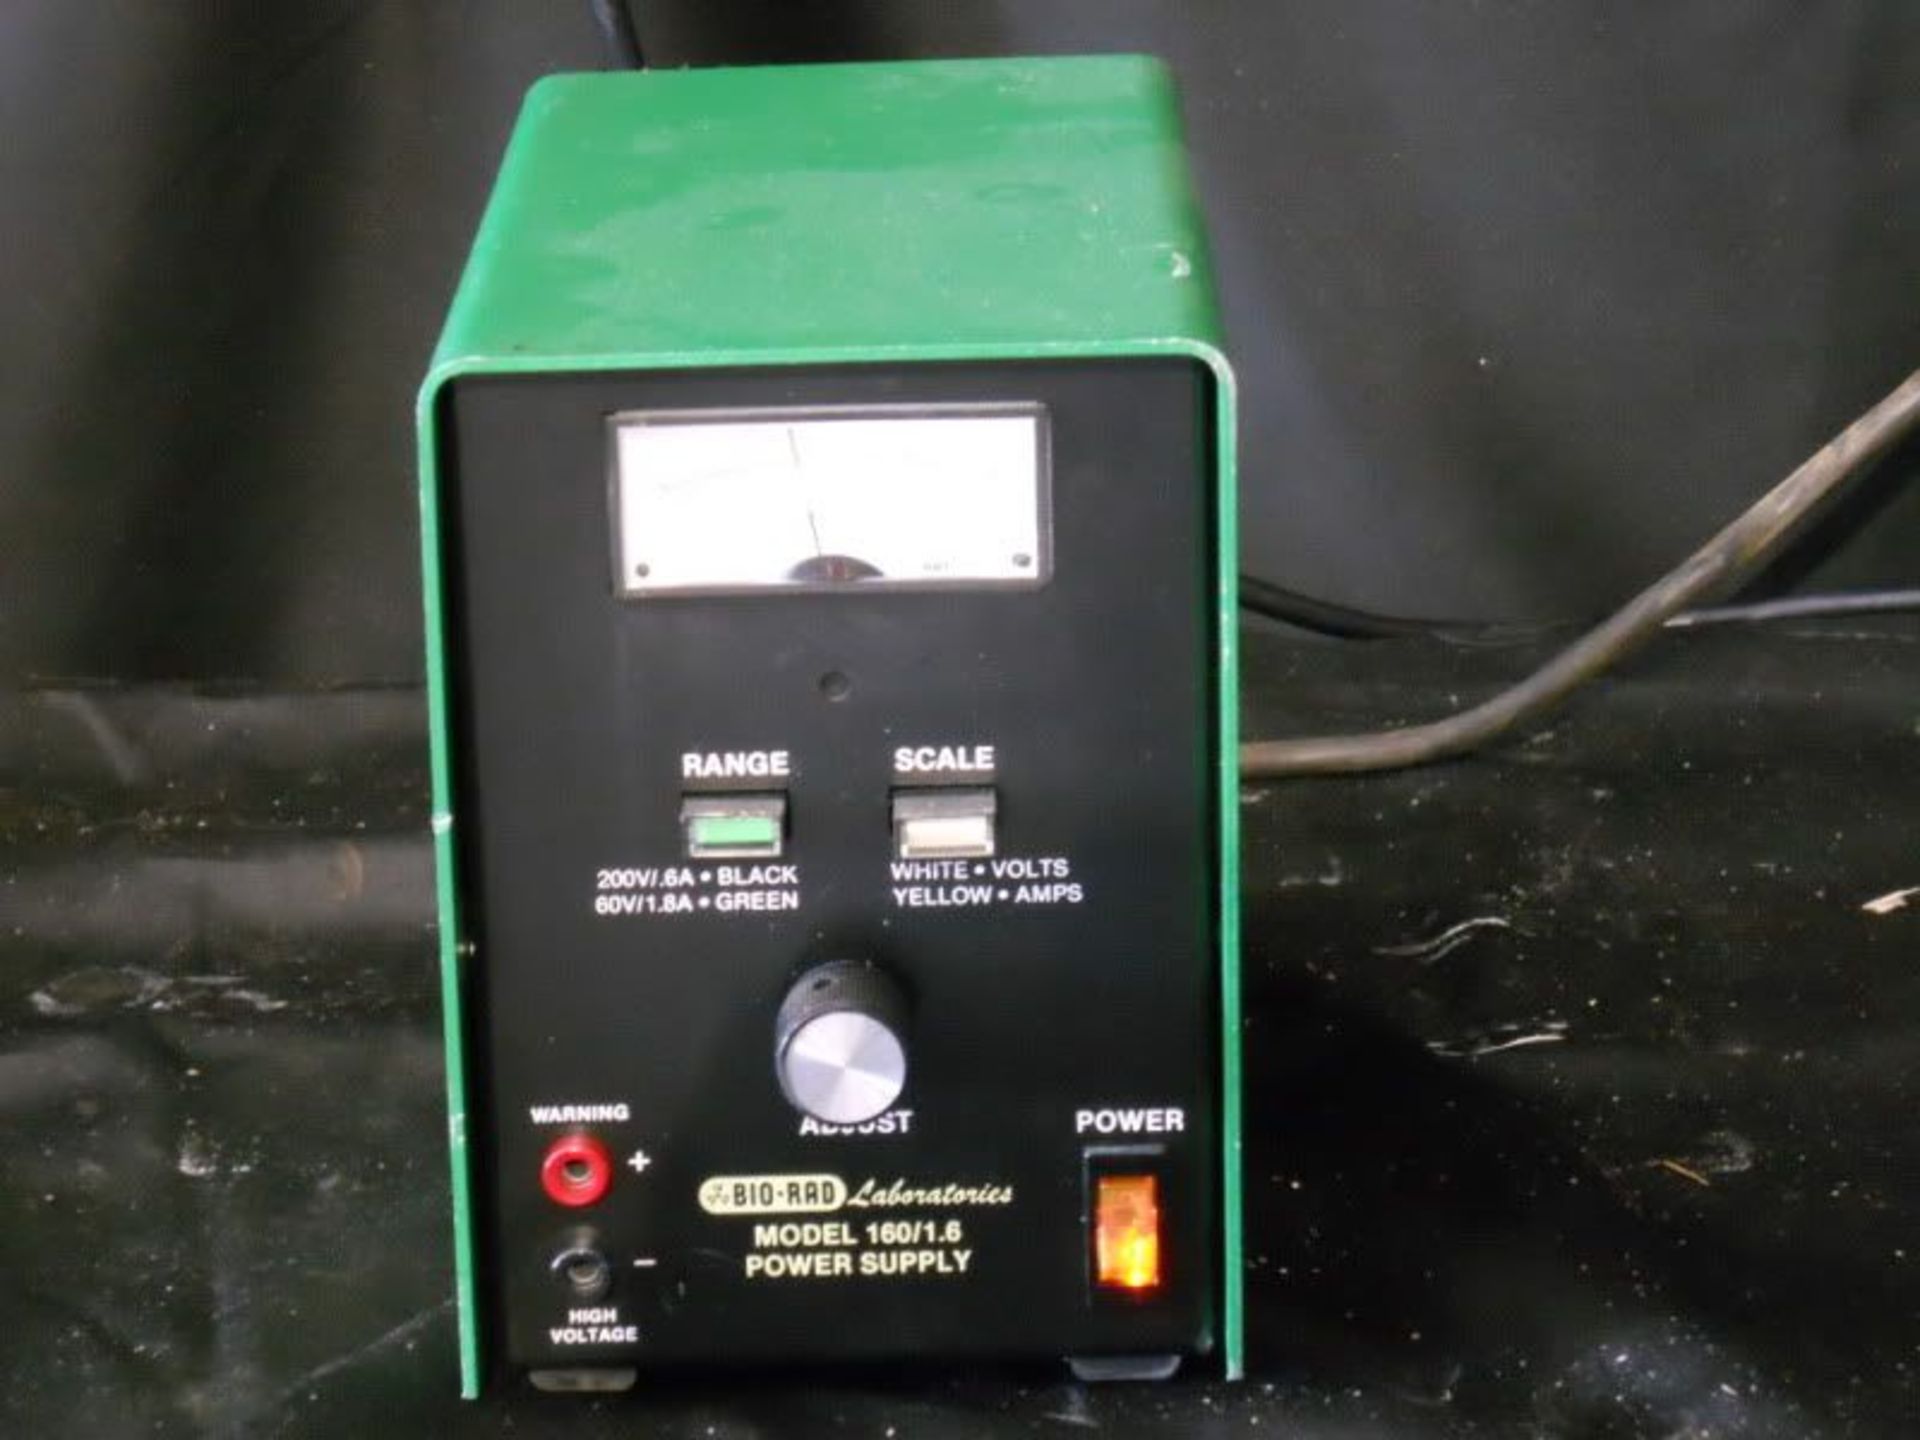 BioRad Model 160/1.6 Electrophoresis Power Supply, Qty 1, 320876956979 - Image 2 of 7